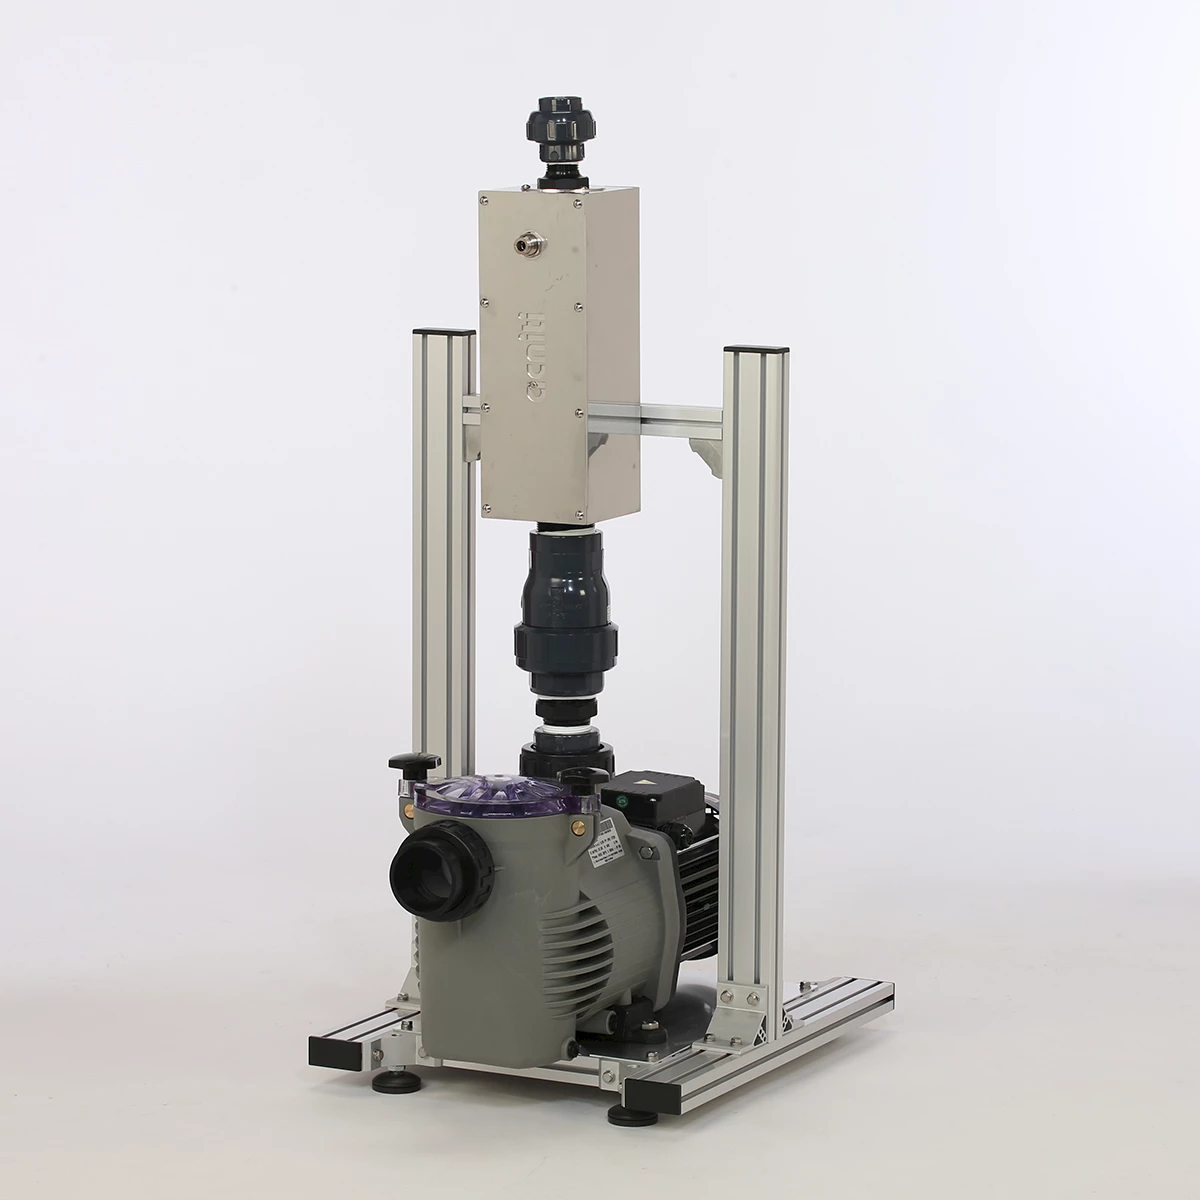 Turbiti 636 O2 nanobubble pumpskid generator for salt and seawater applications